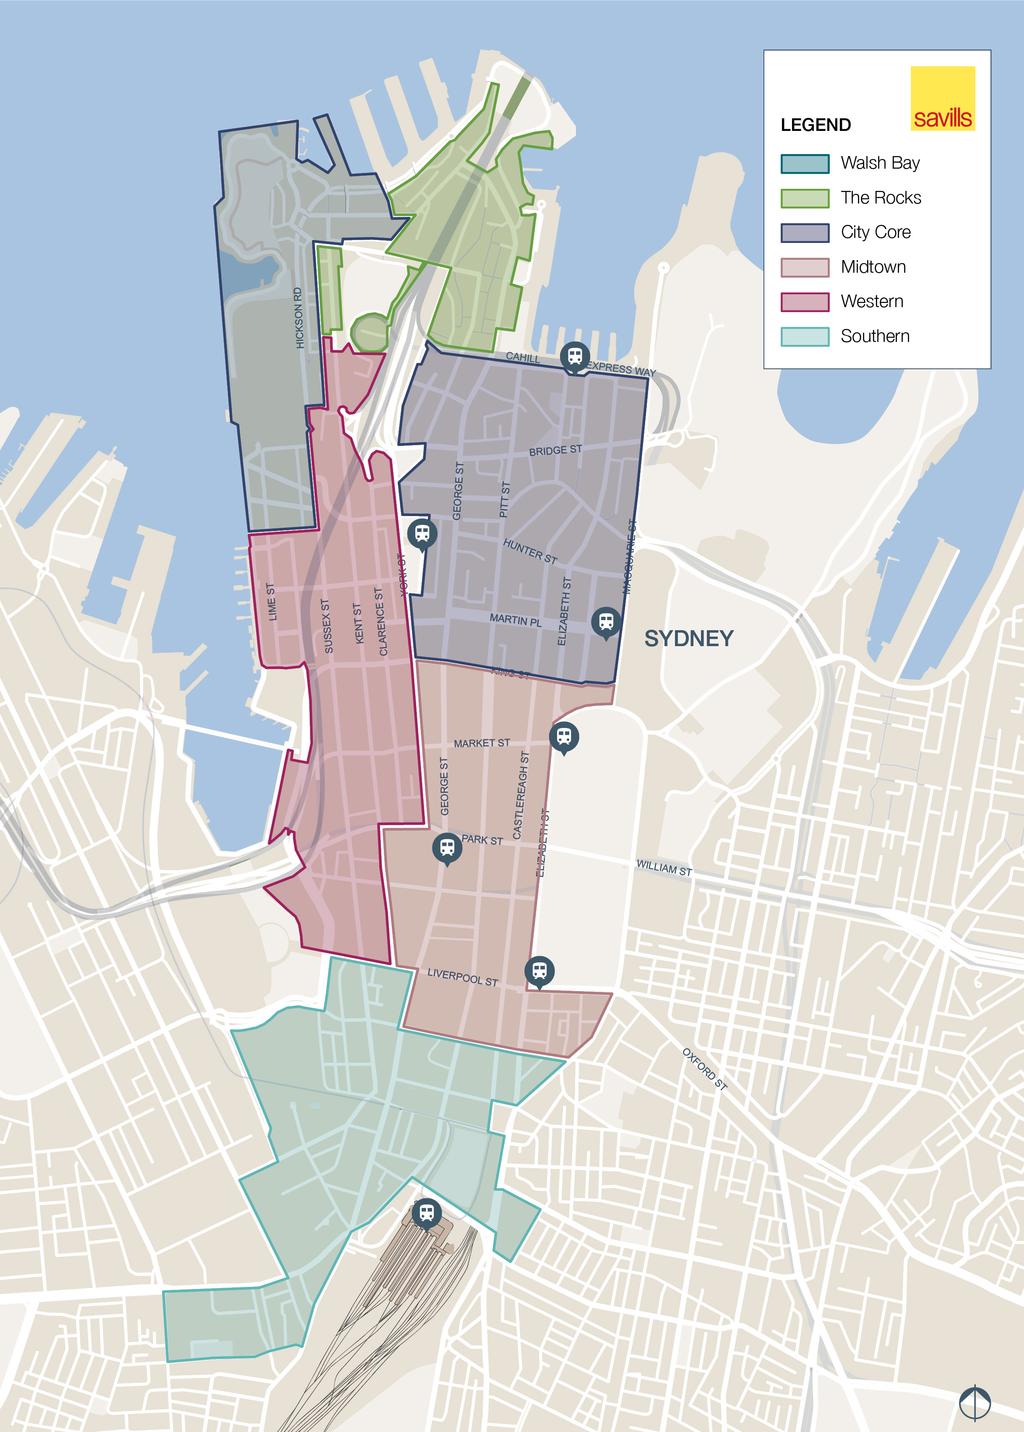 Savills Research Briefing Notes Sydney CBD Development Map 17 13